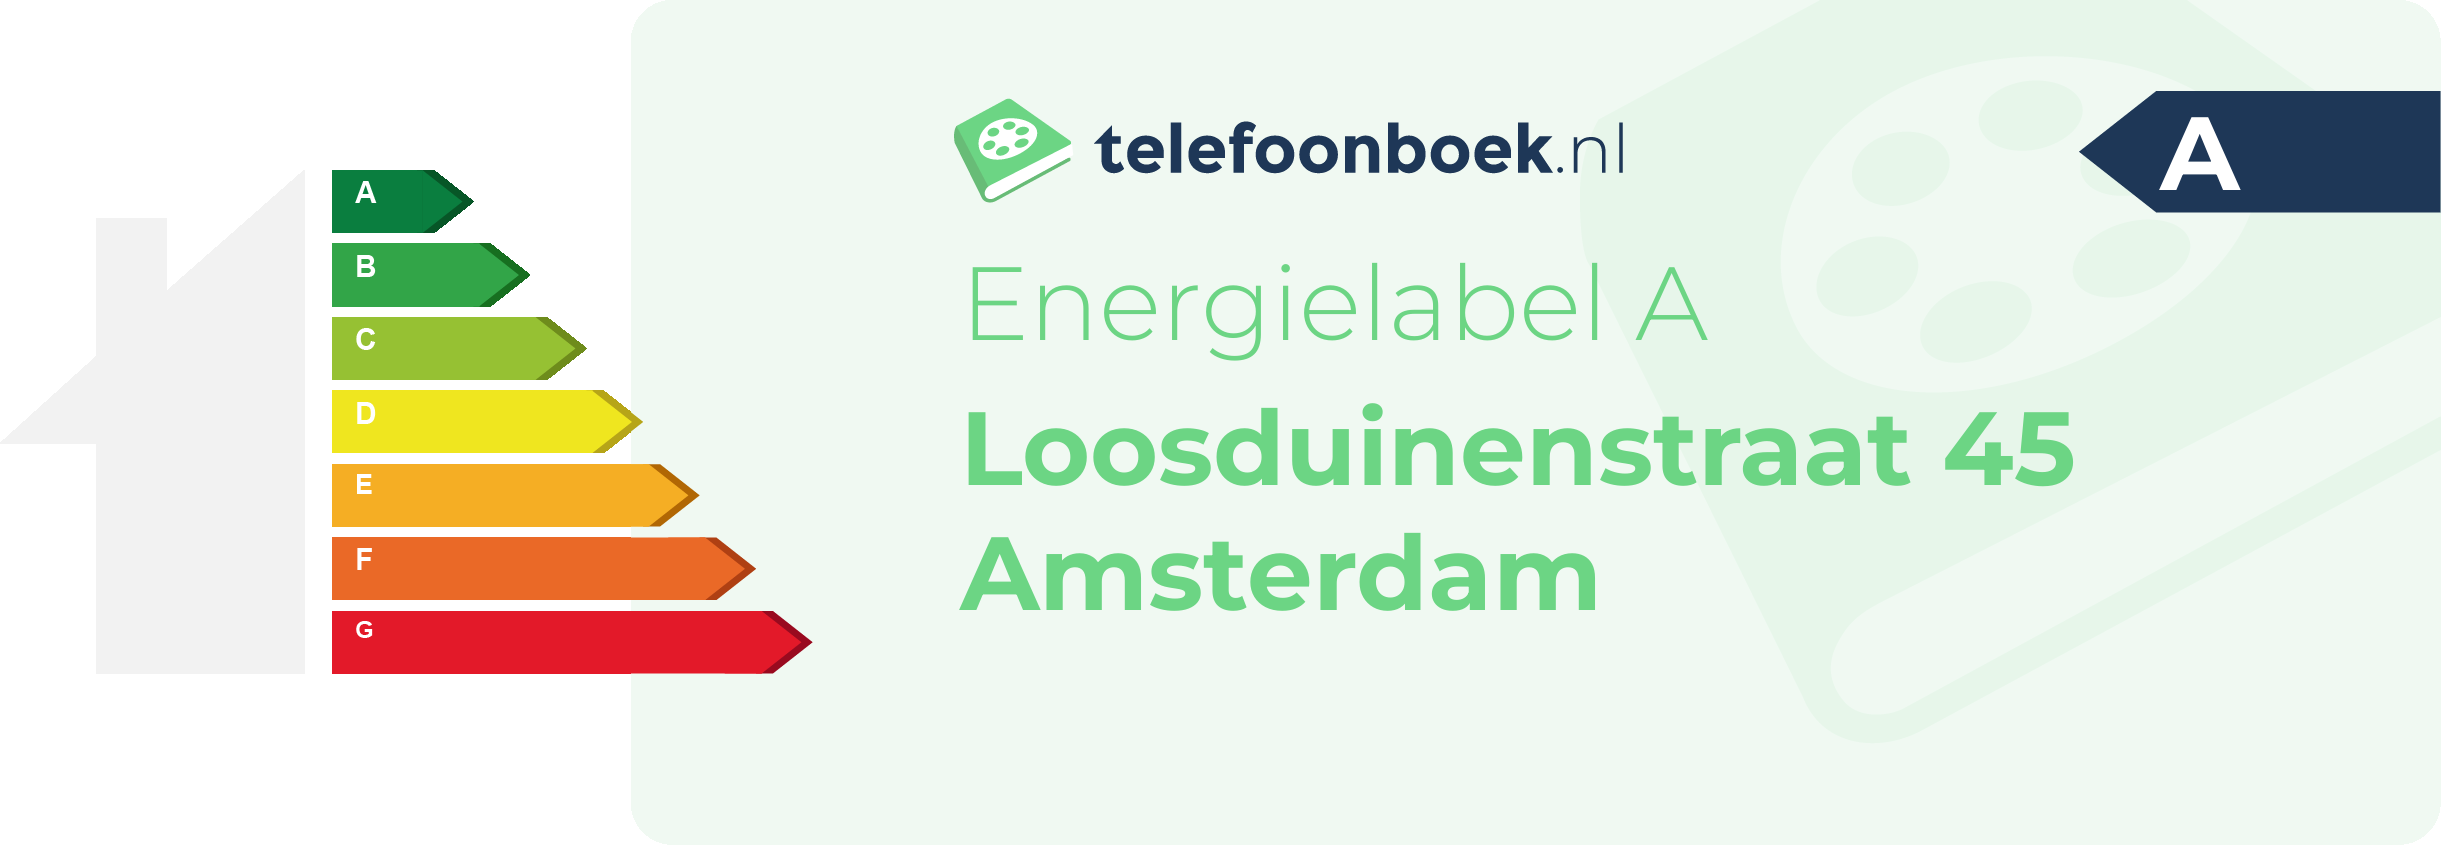 Energielabel Loosduinenstraat 45 Amsterdam